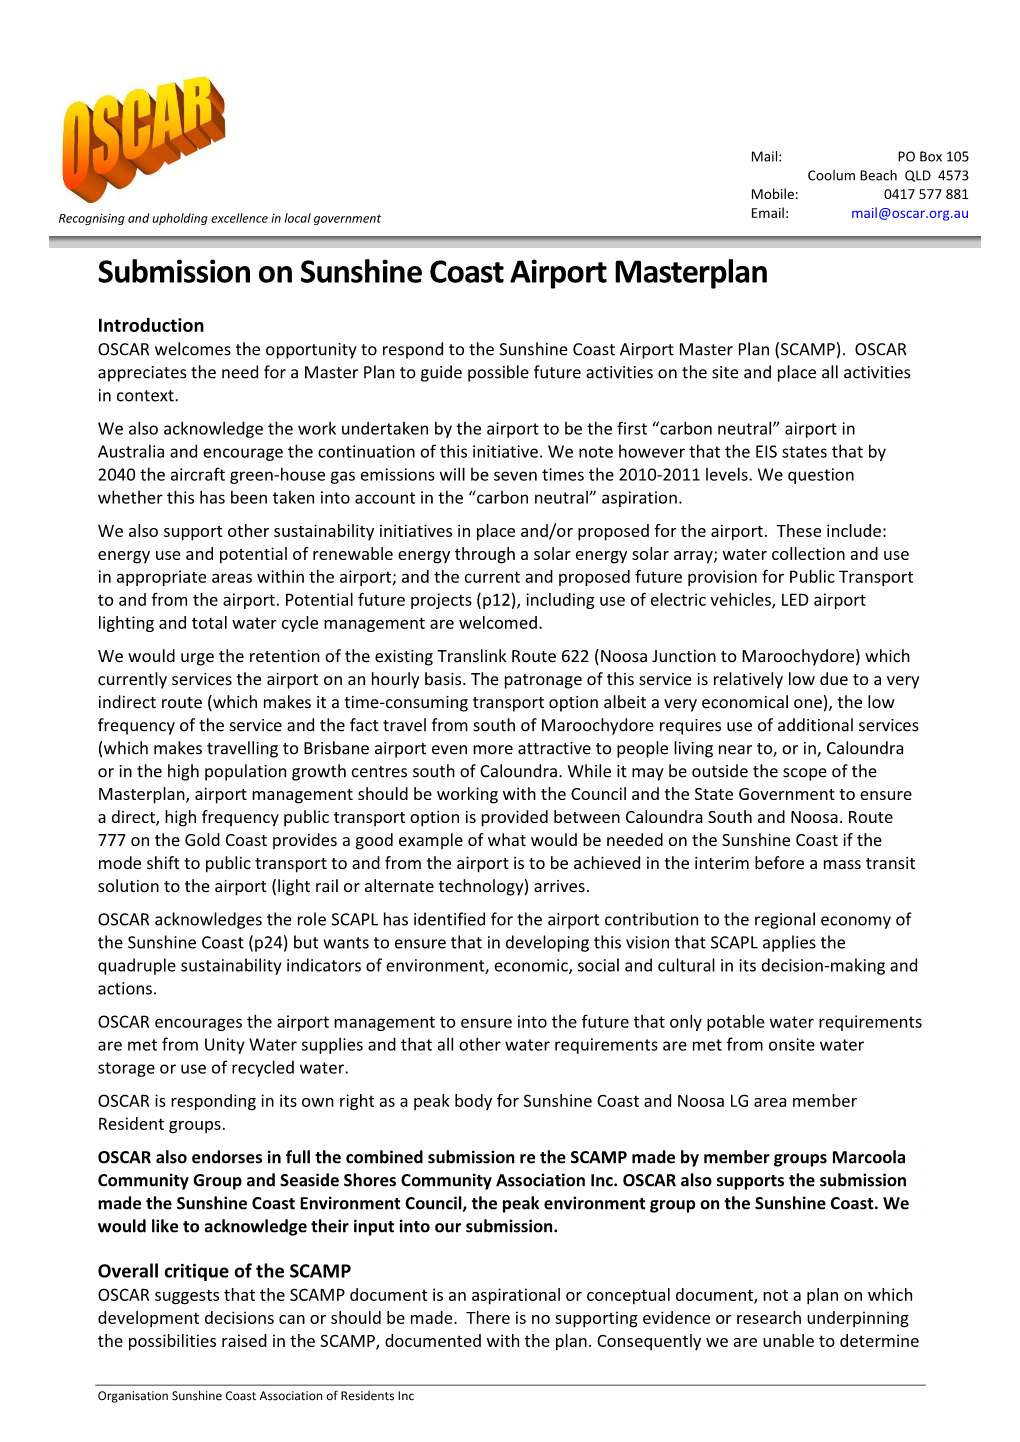 Submission on Sunshine Coast Airport Masterplan